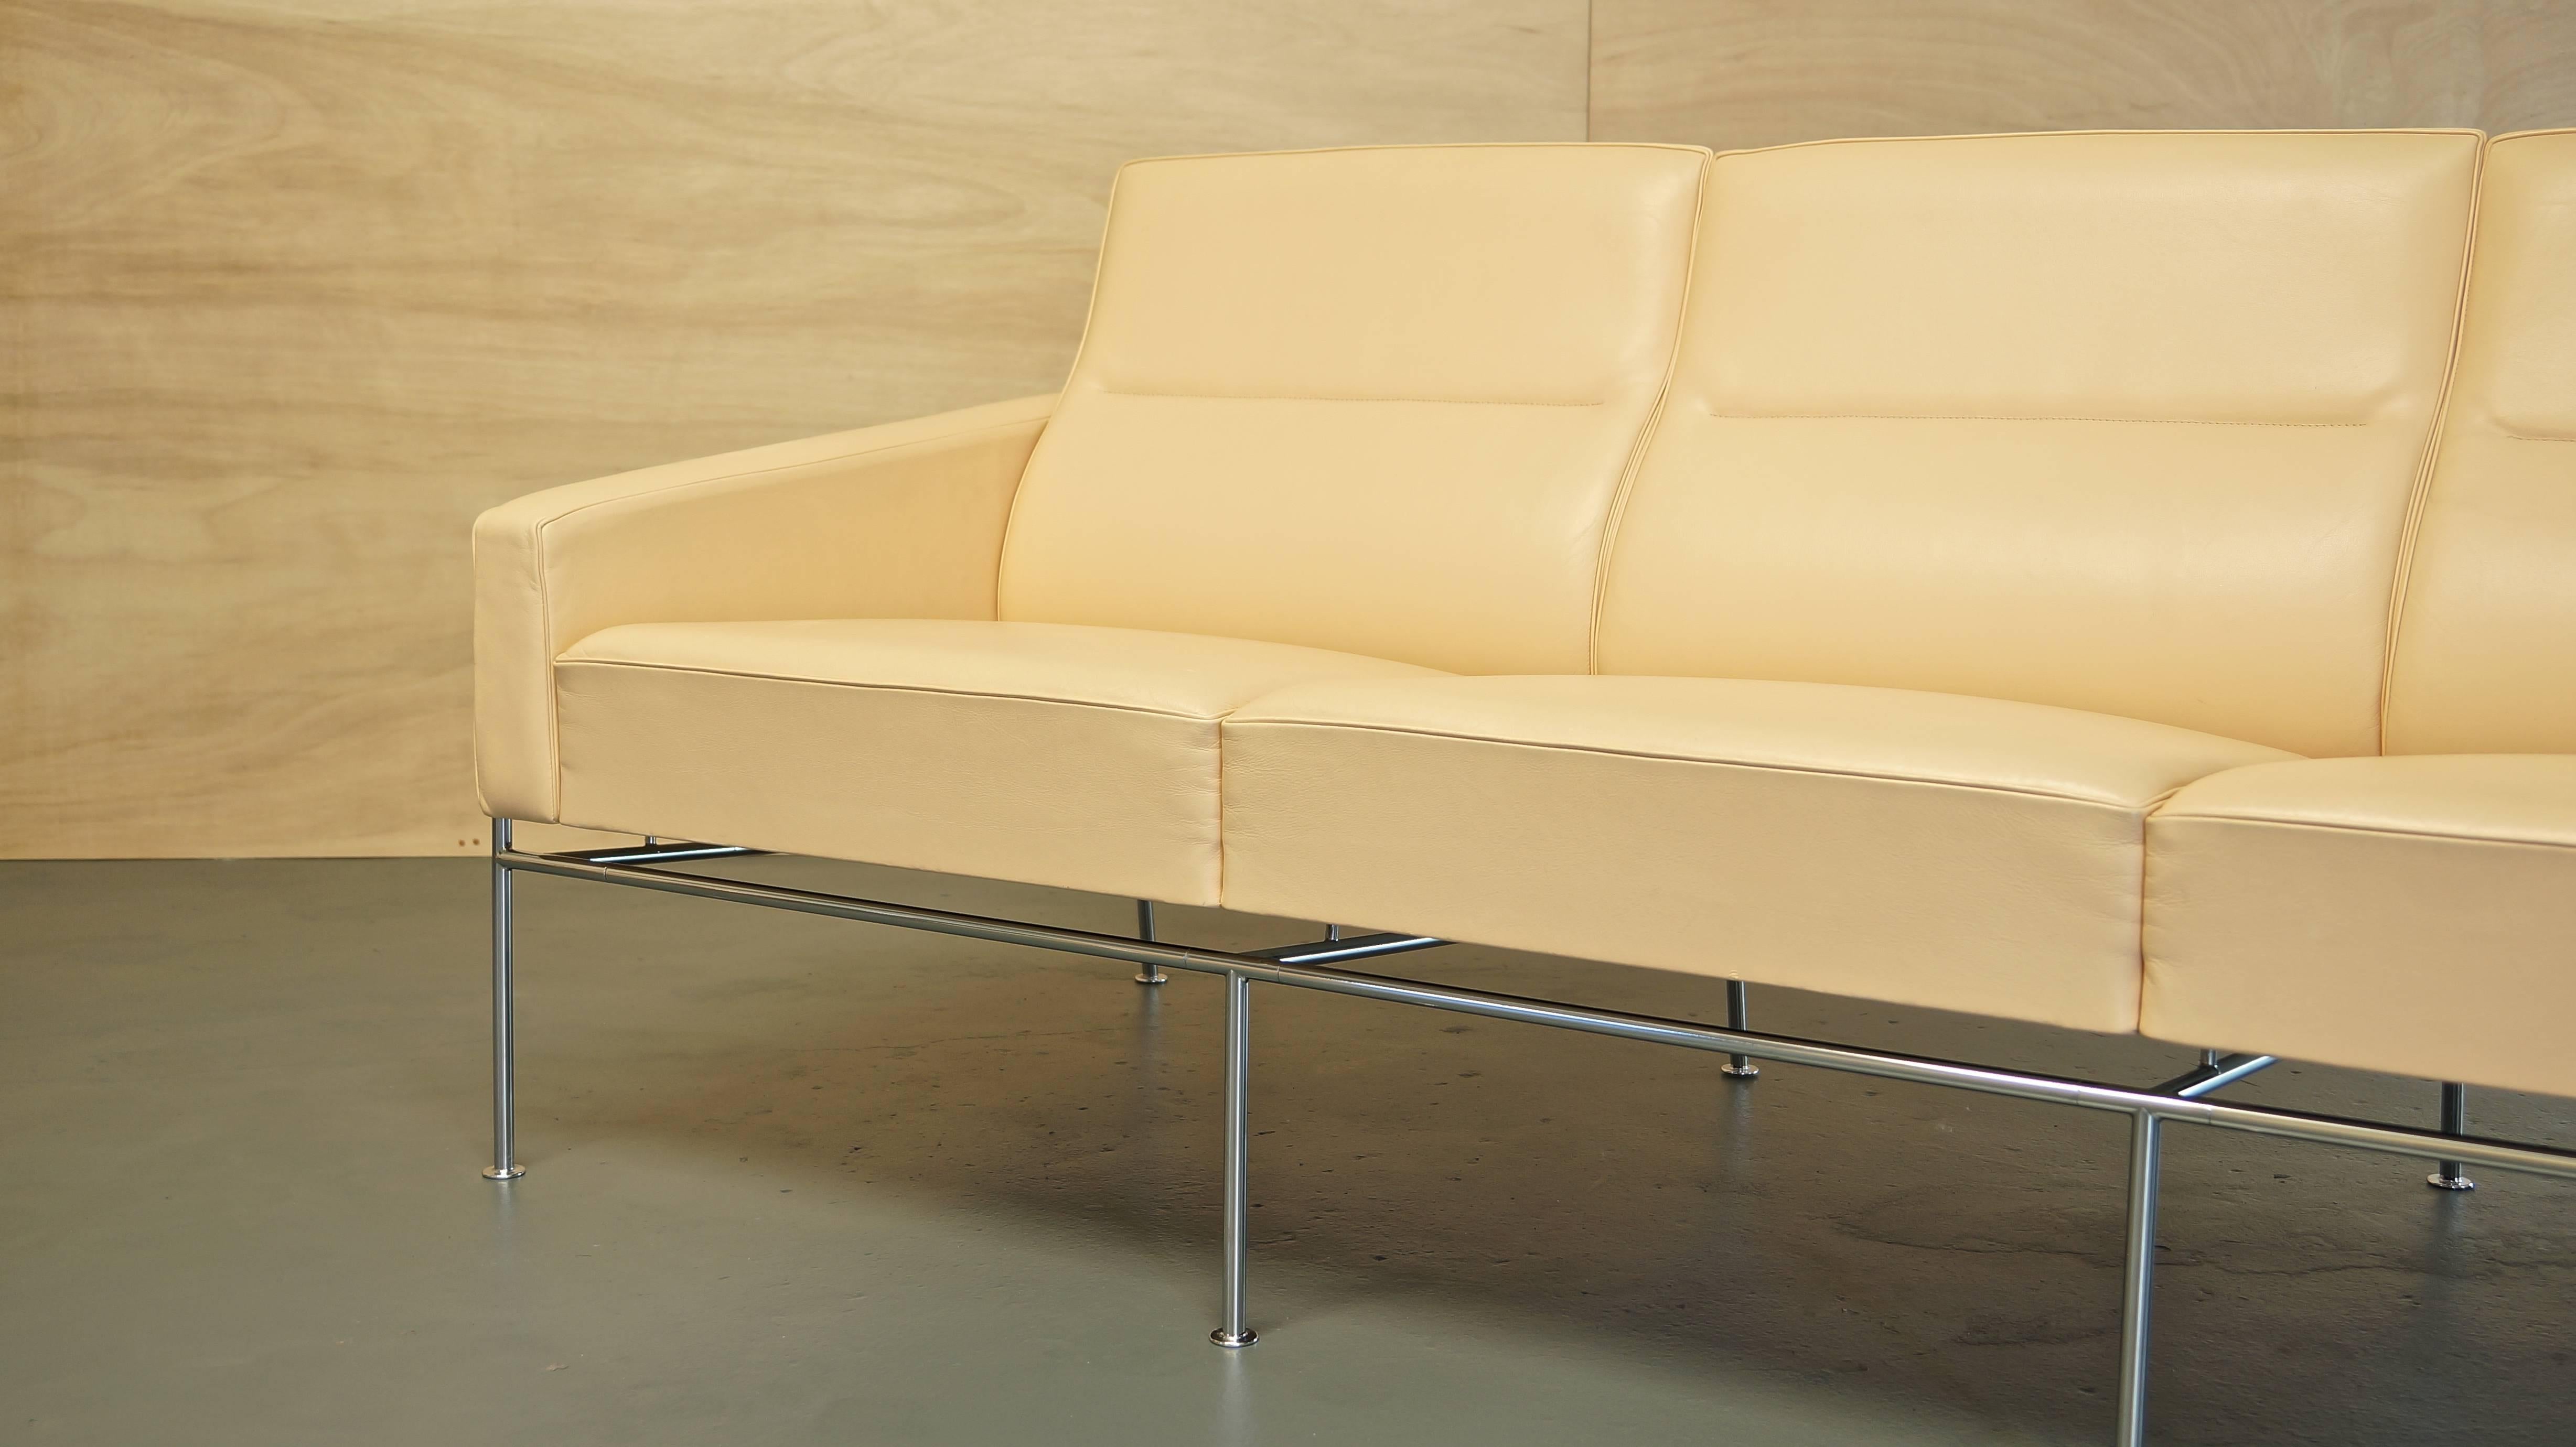 Arne Jacobsen series 3303 sofa in premium cream leather. 

Design: Arne Jacobsen. 
Manufactured in Denmark by Fritz Hansen. 

Chair dimensions: Height 72 cm, depth 79 cm, width 73 cm. 

Sofa dimension: Height 72 cm, depth 79 cm, width 182